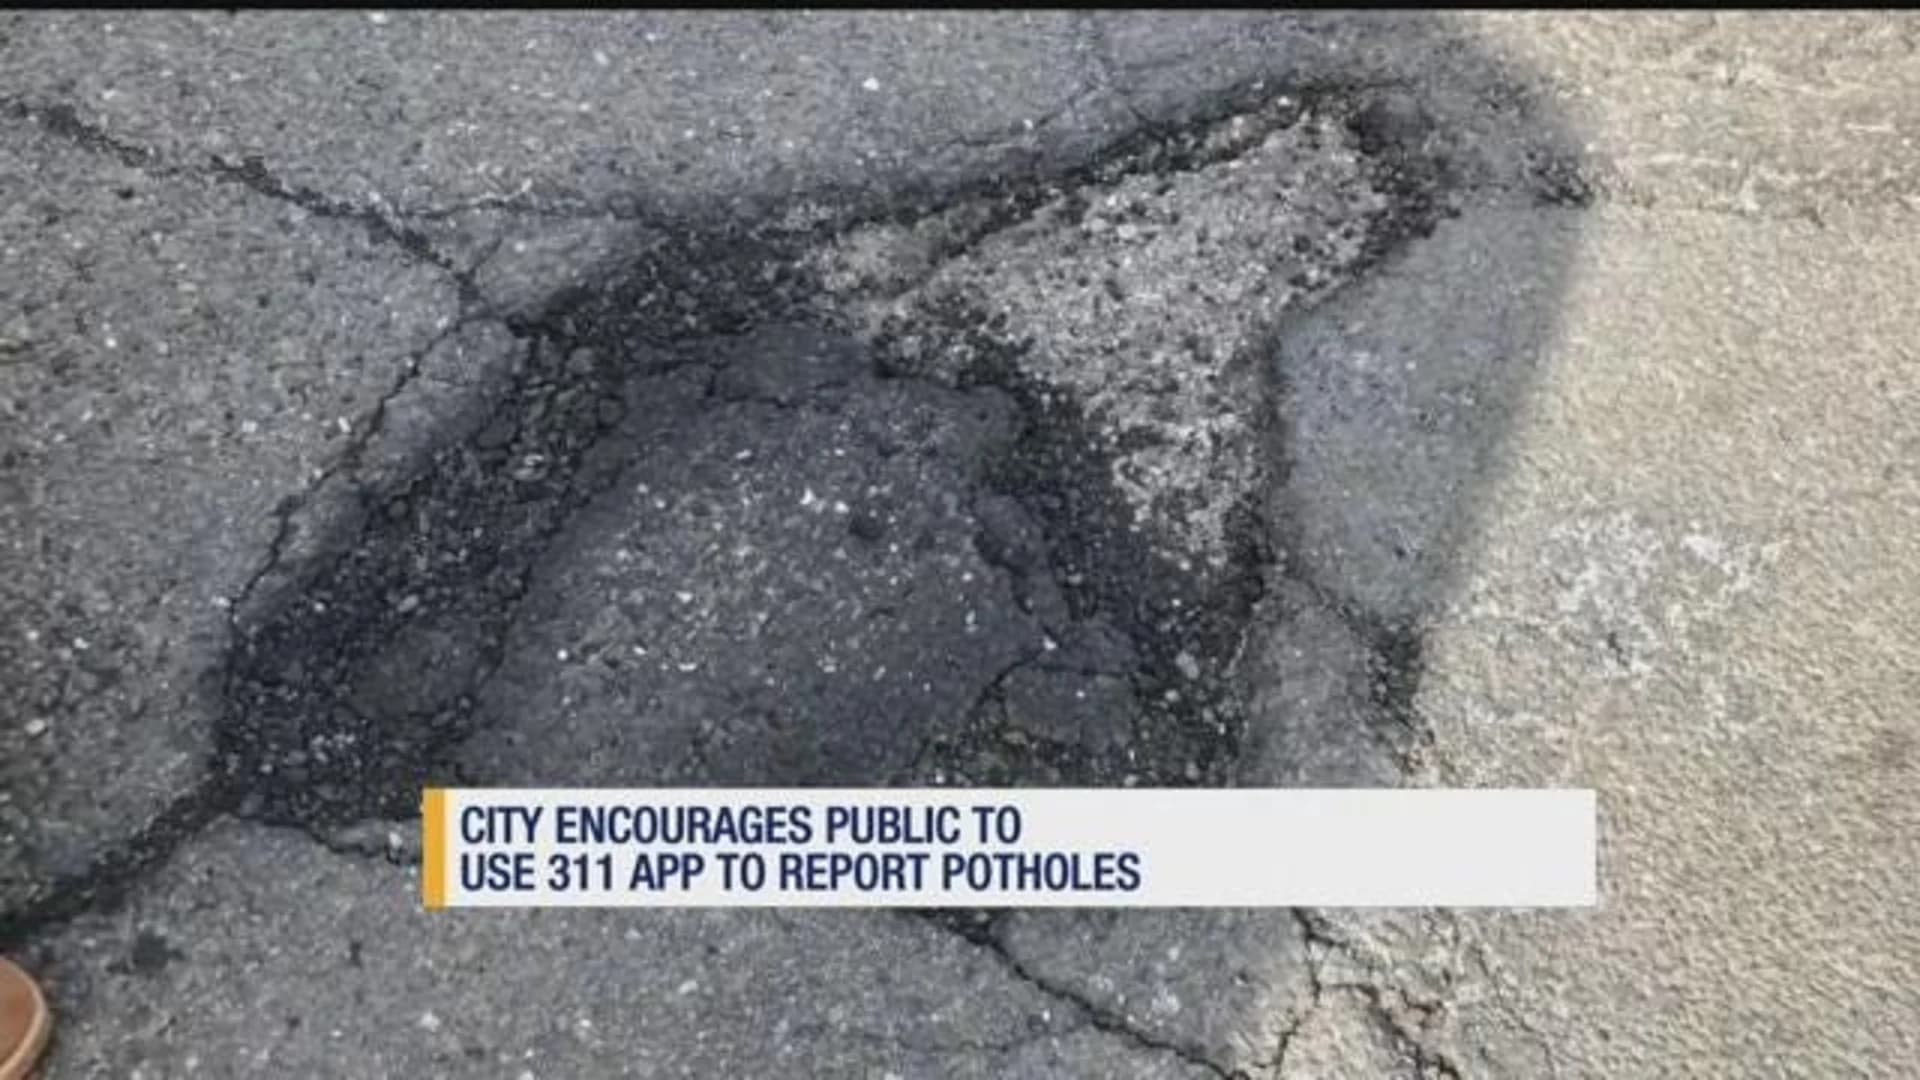 Bridgeport officials ask public to report potholes using app